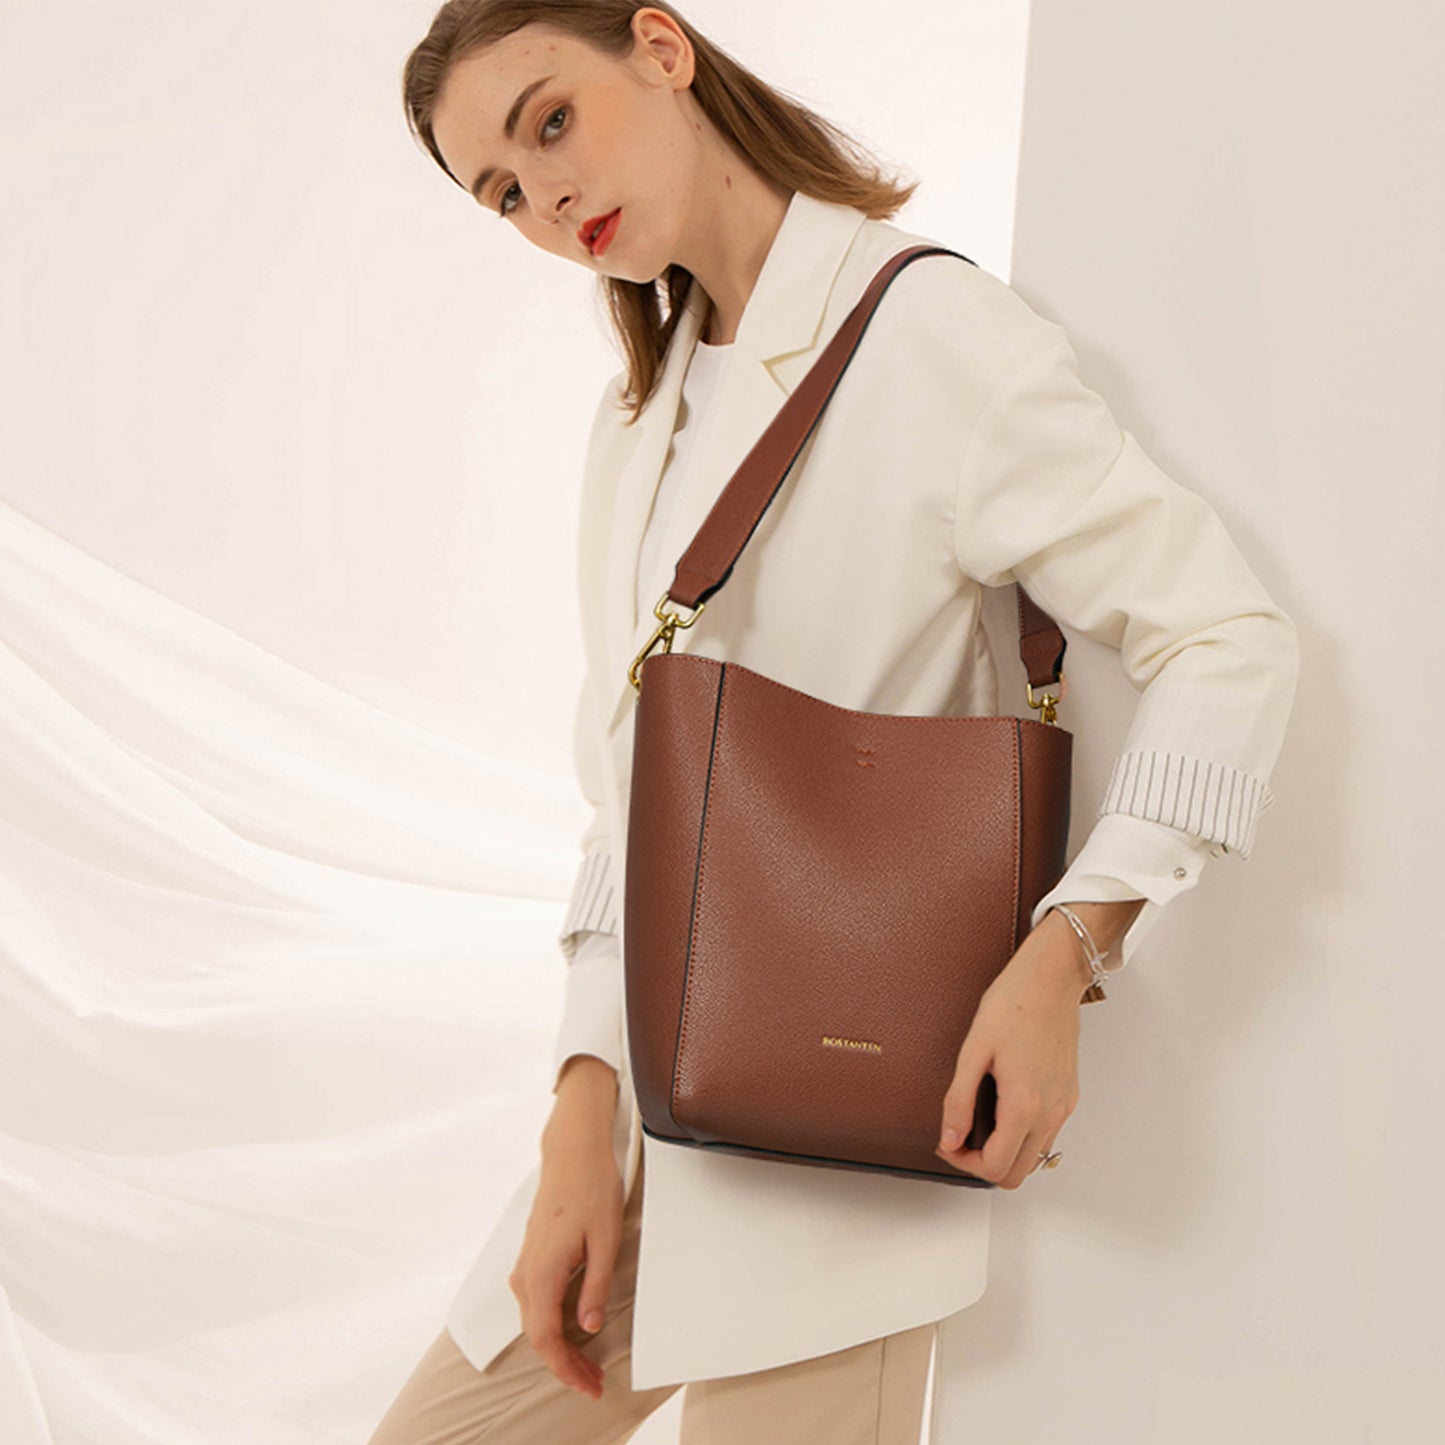 BOSTANTEN Women Handbags Leather Designer Tote Purses Lady Crossbody Bucket Shoulder Hobo Bags for Work Daily